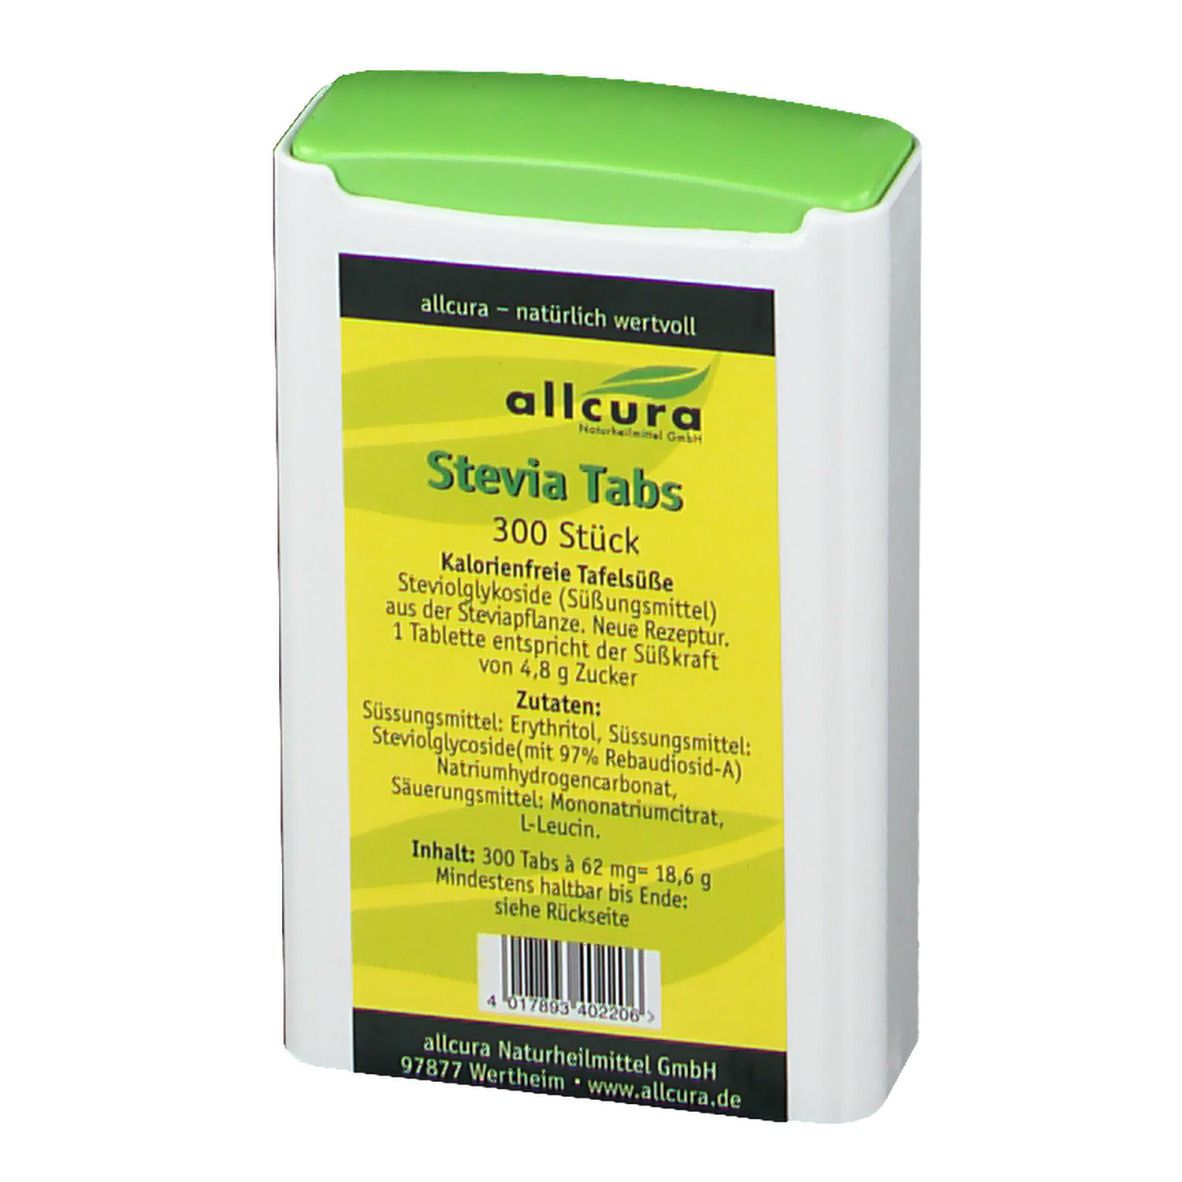 allcura Stevia Tabs